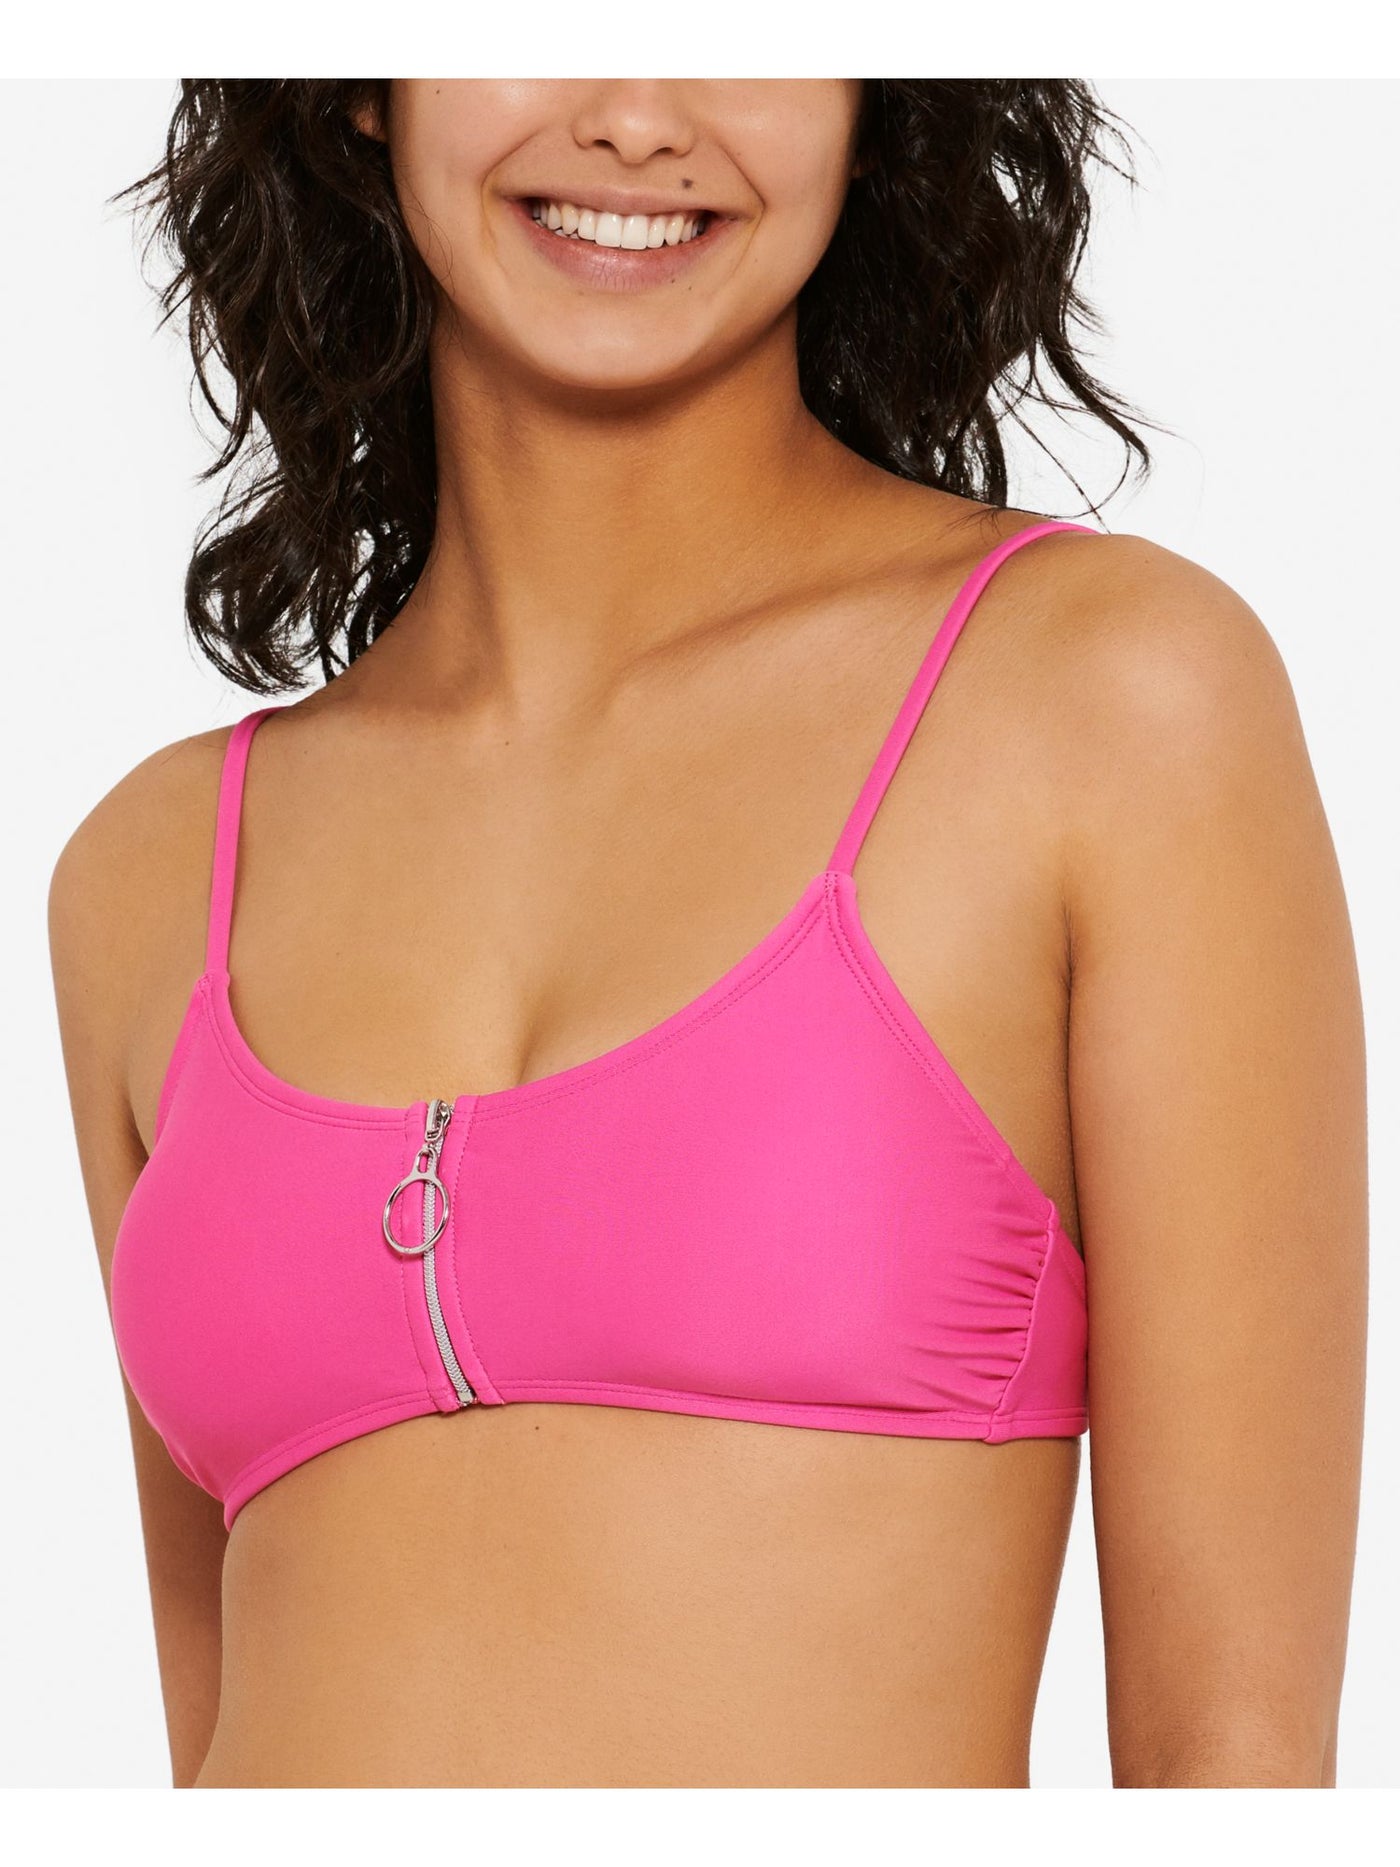 HULA HONEY Women's Pink Stretch Zippered Adjustable Bralette Swimsuit Top M